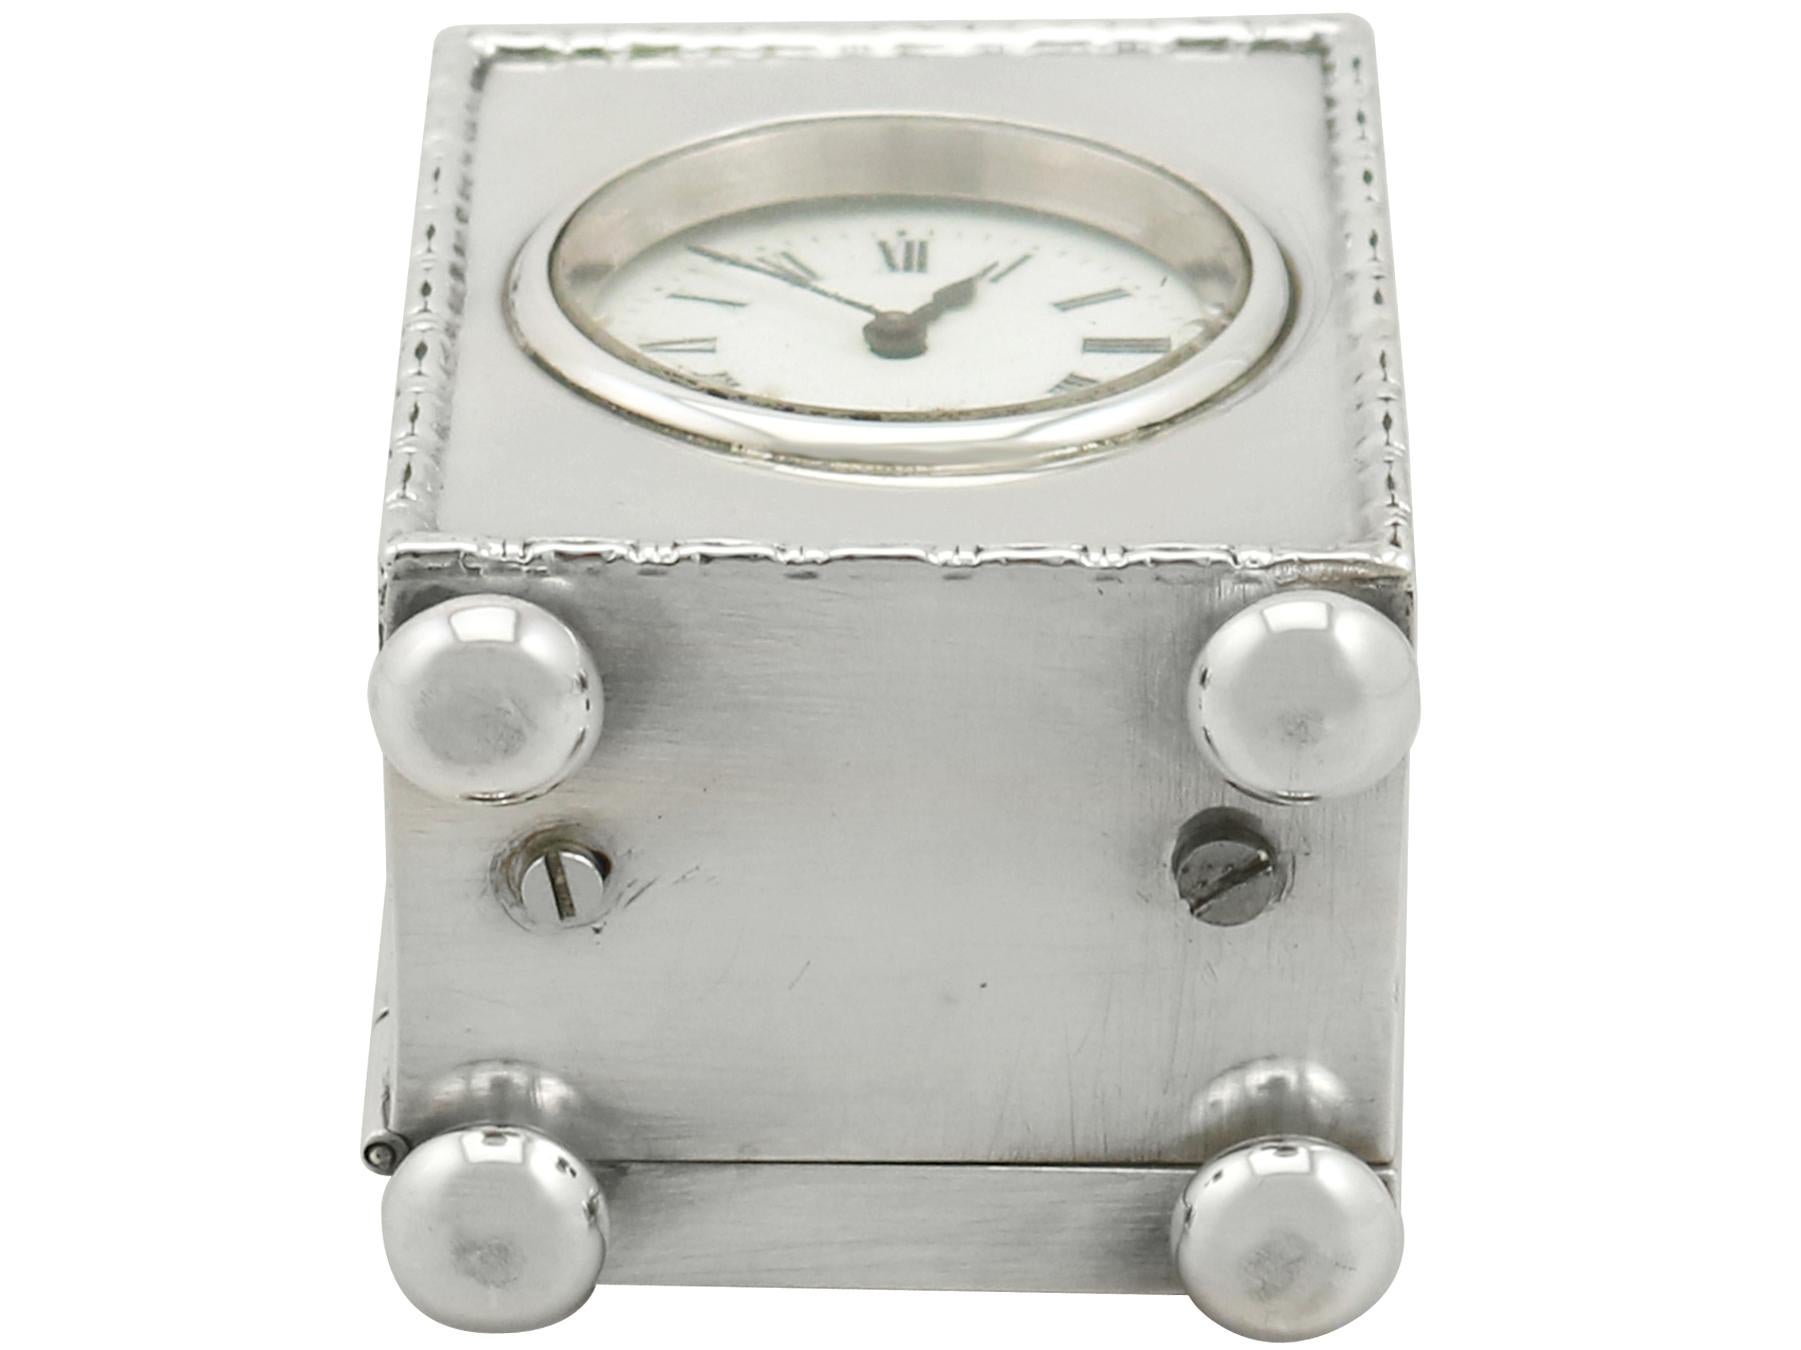 Antique 1910s Sterling Silver Boudoir Clock 6